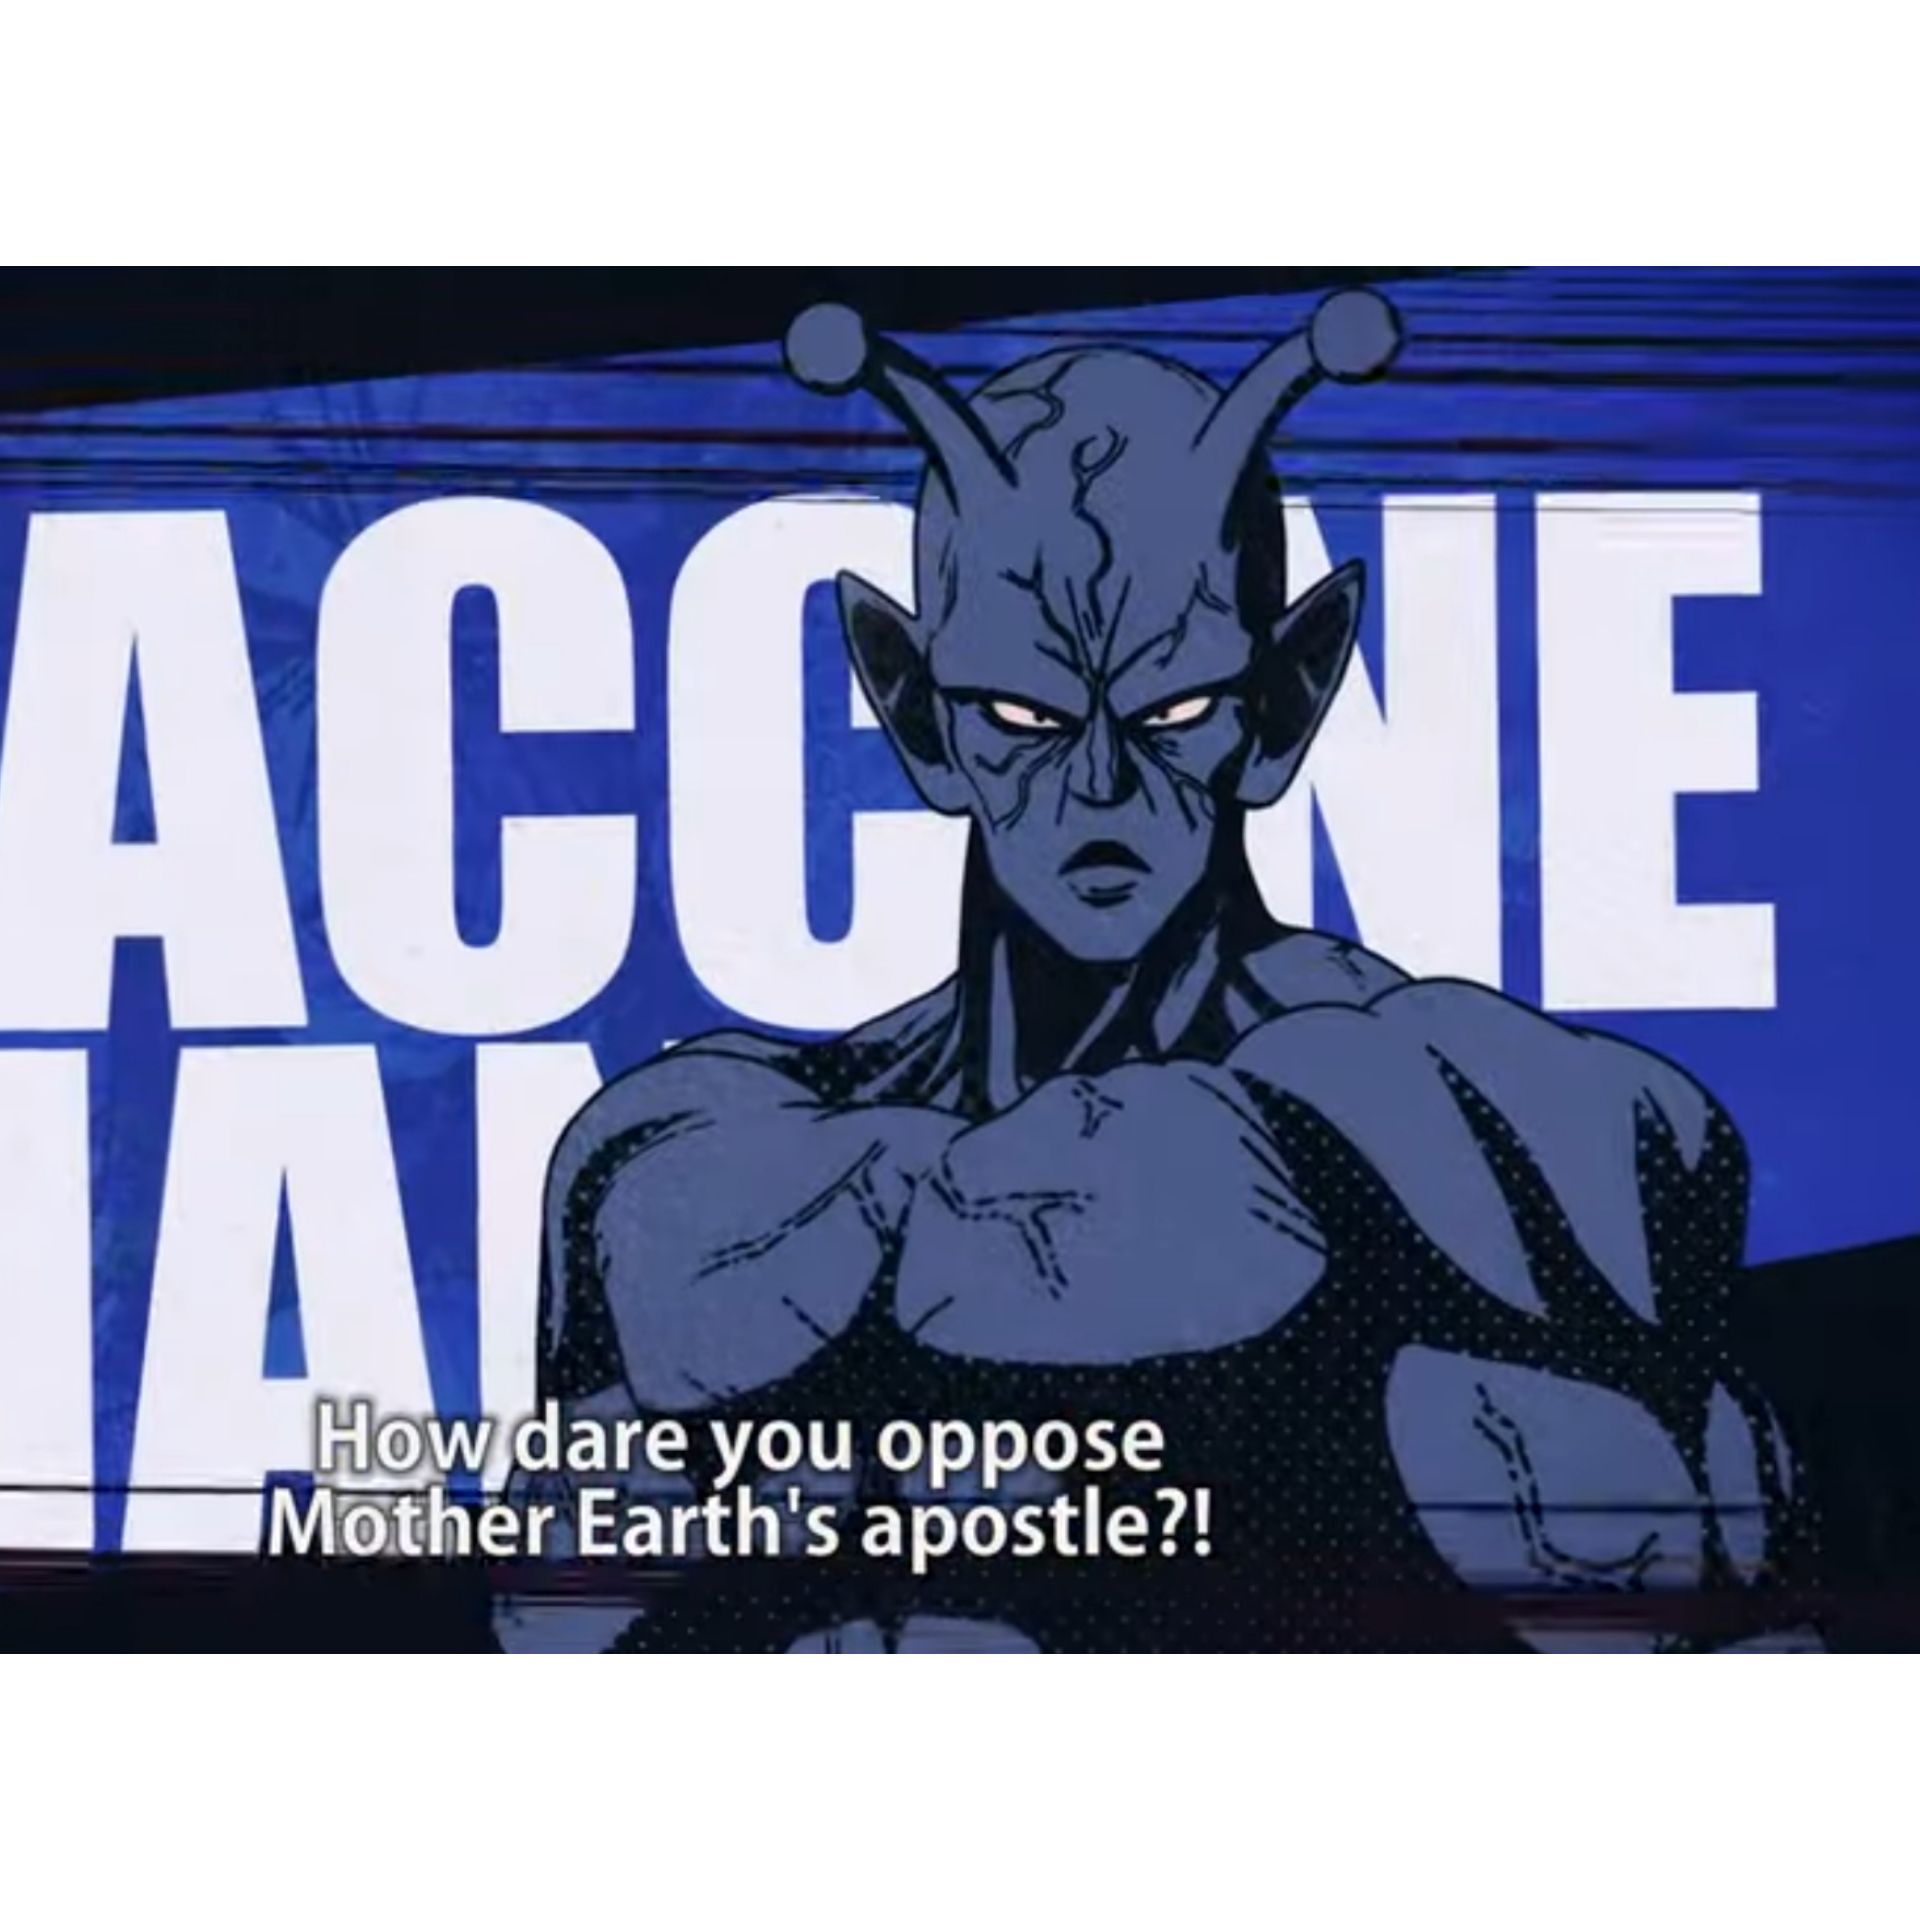 Vaccine Man, karakter baru di game One Punch Man.